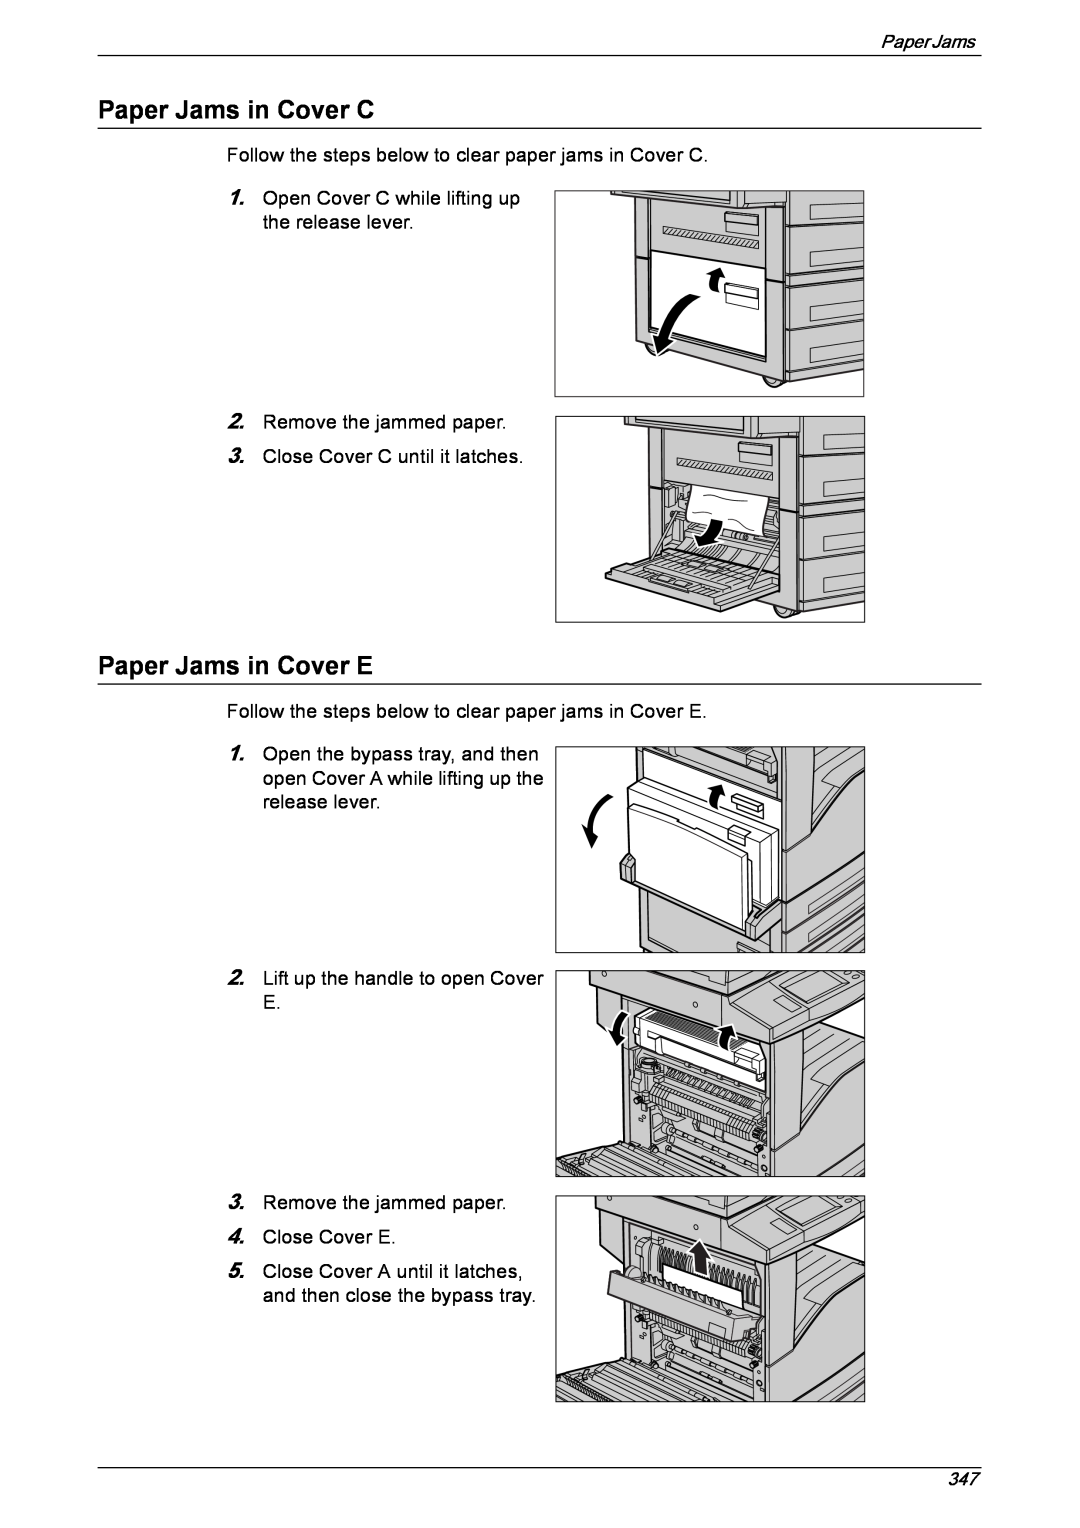 Xerox 5222 manual Paper Jams in Cover C, Paper Jams in Cover E 